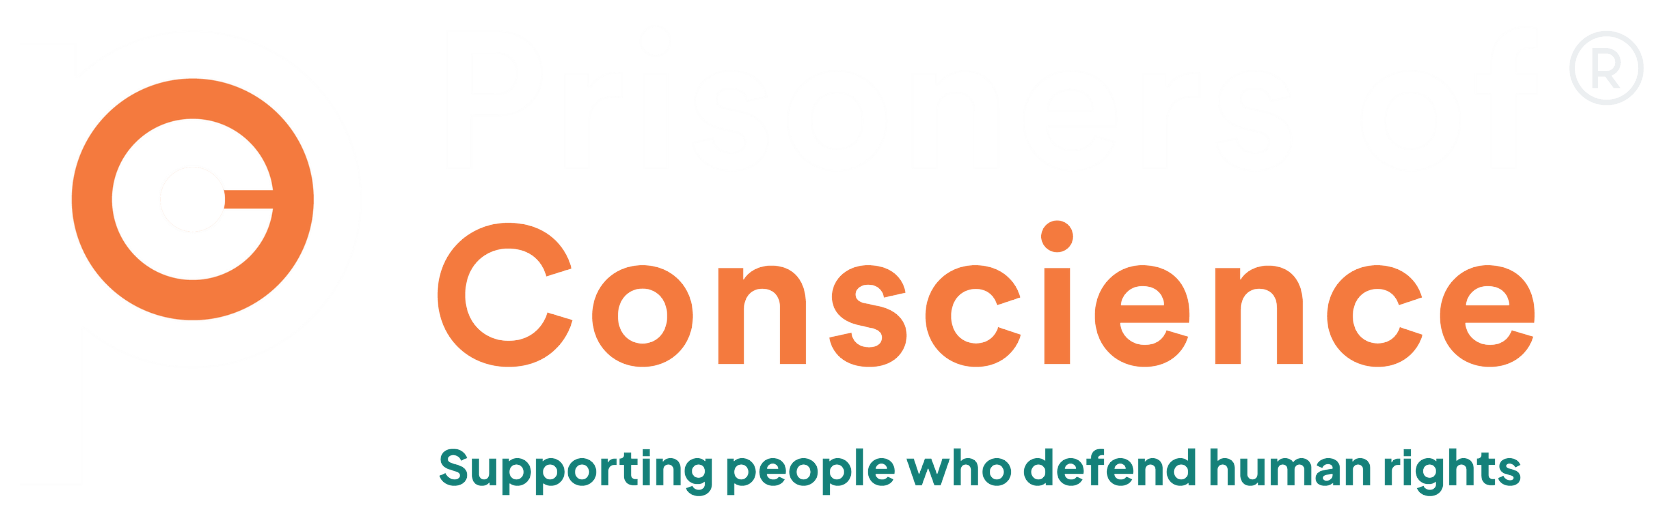 Prisoners of Conscience Shop